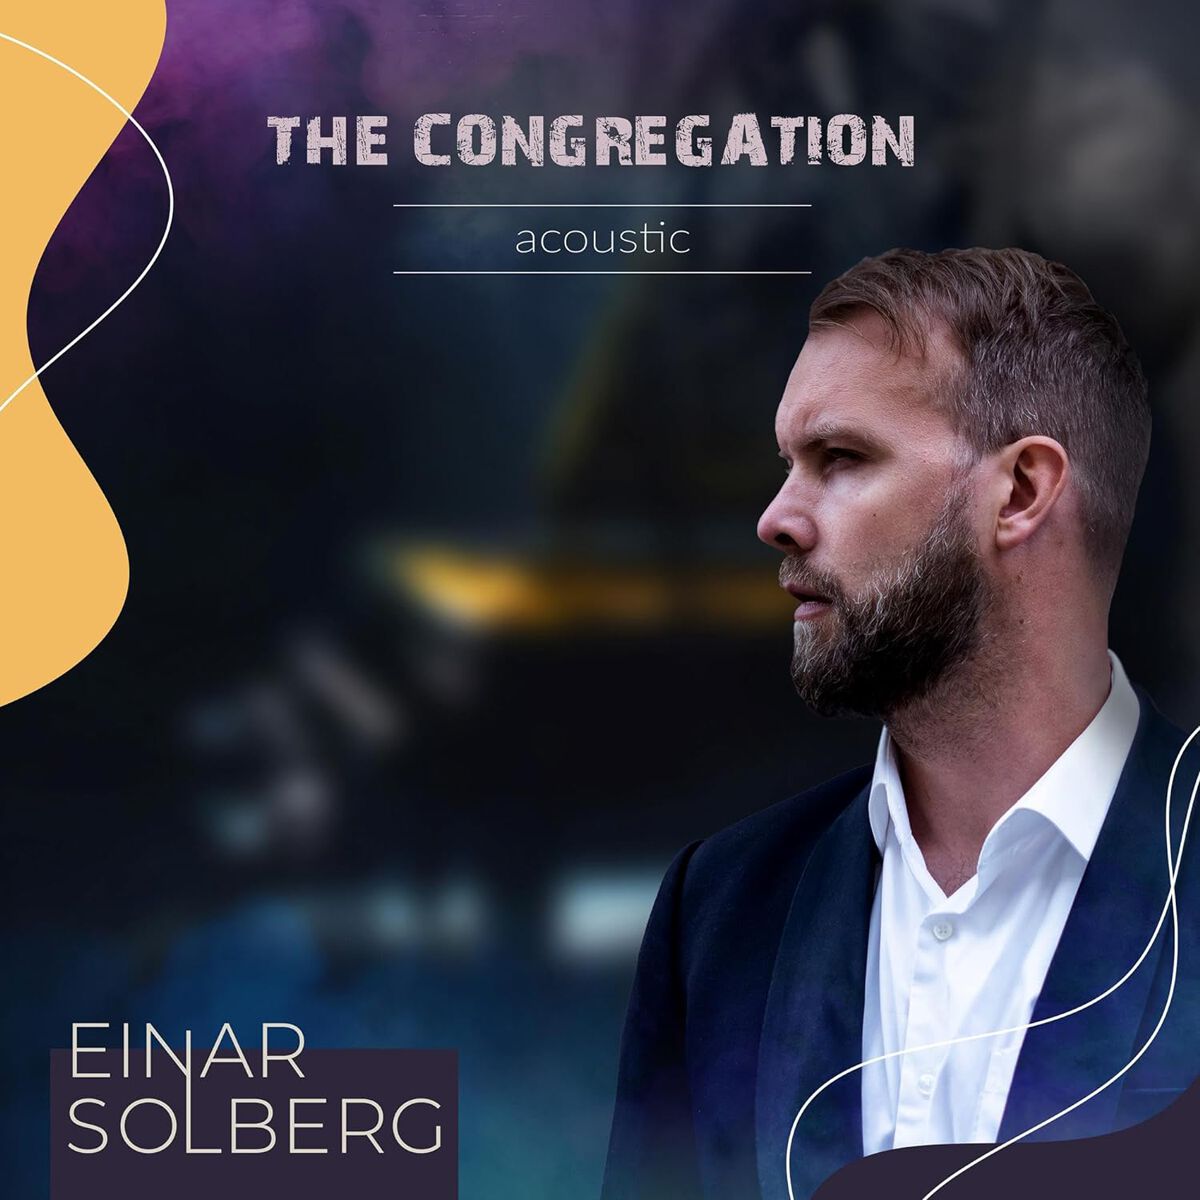 Einar Solberg The congregation acoustic CD multicolor